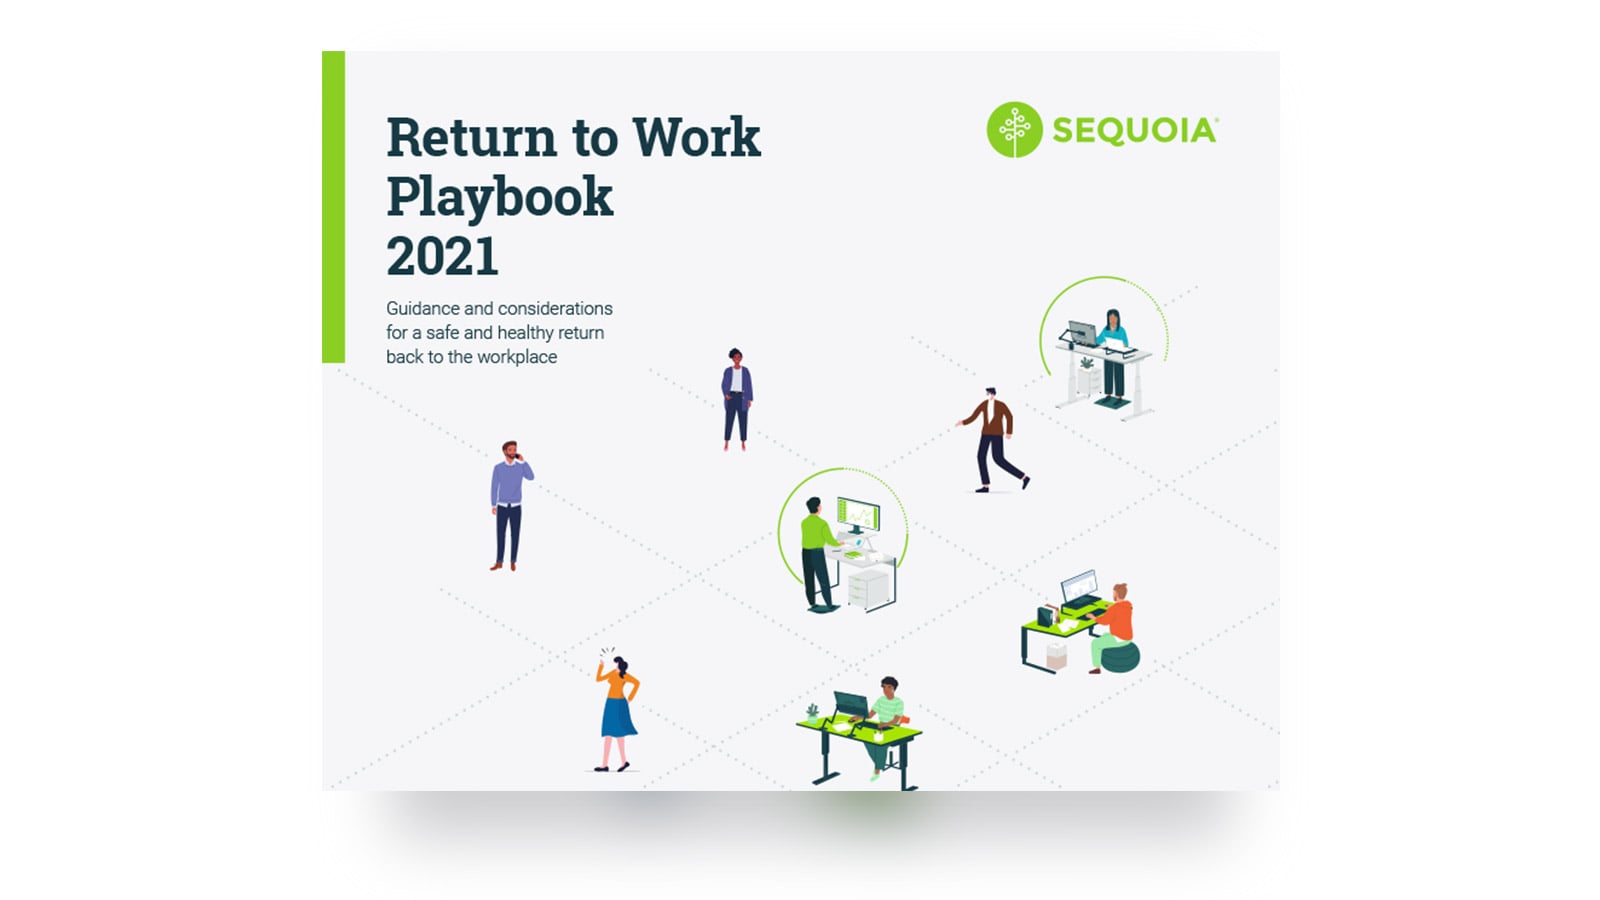 Return to Work Playbook 2021